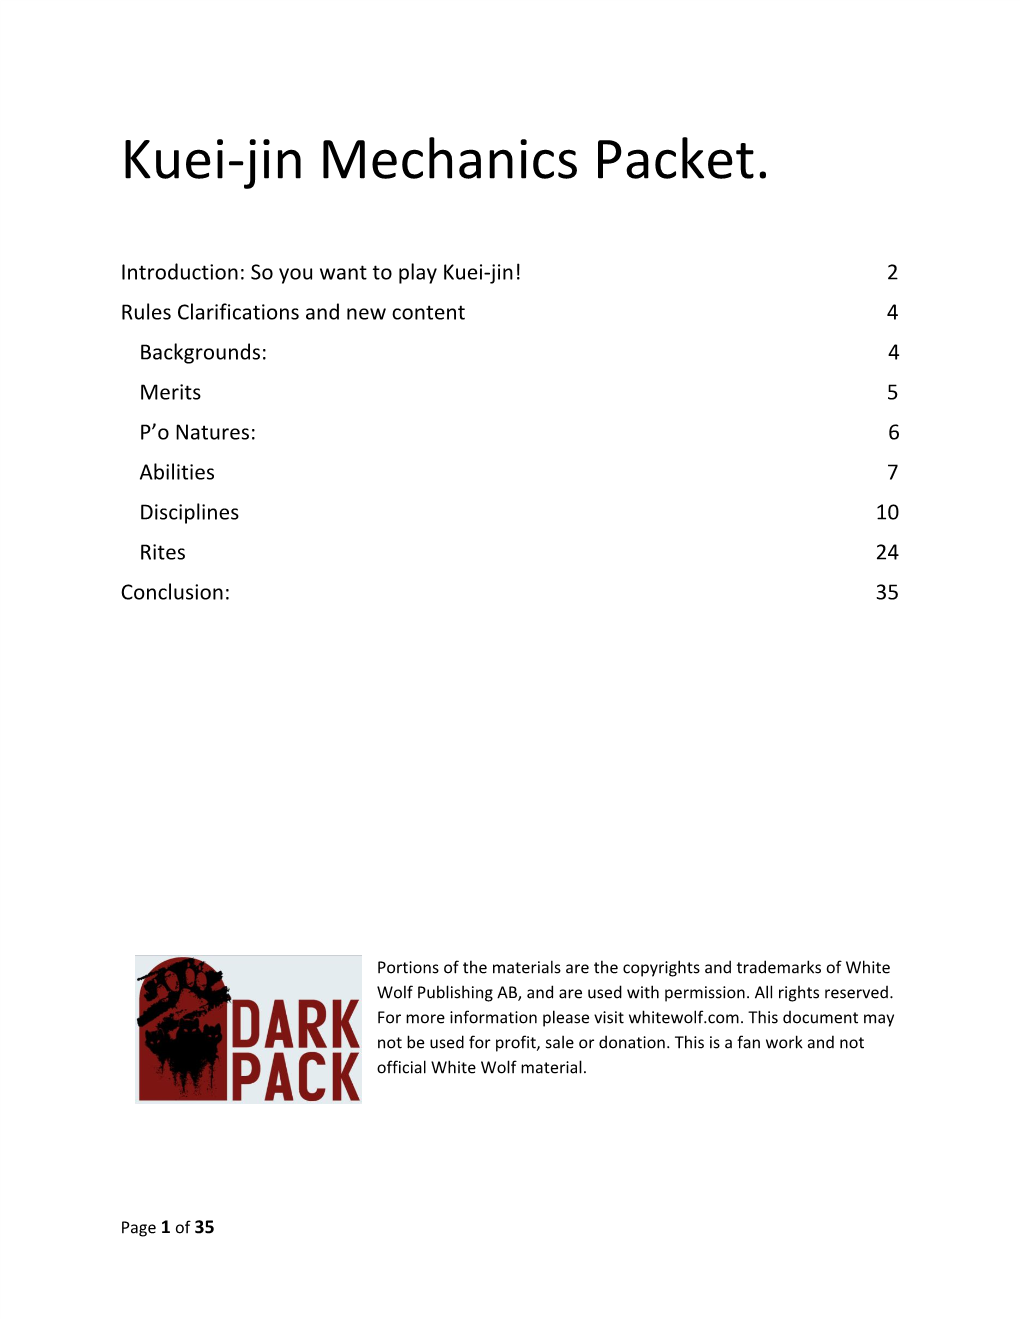 Kuei-Jin Mechanics Packet